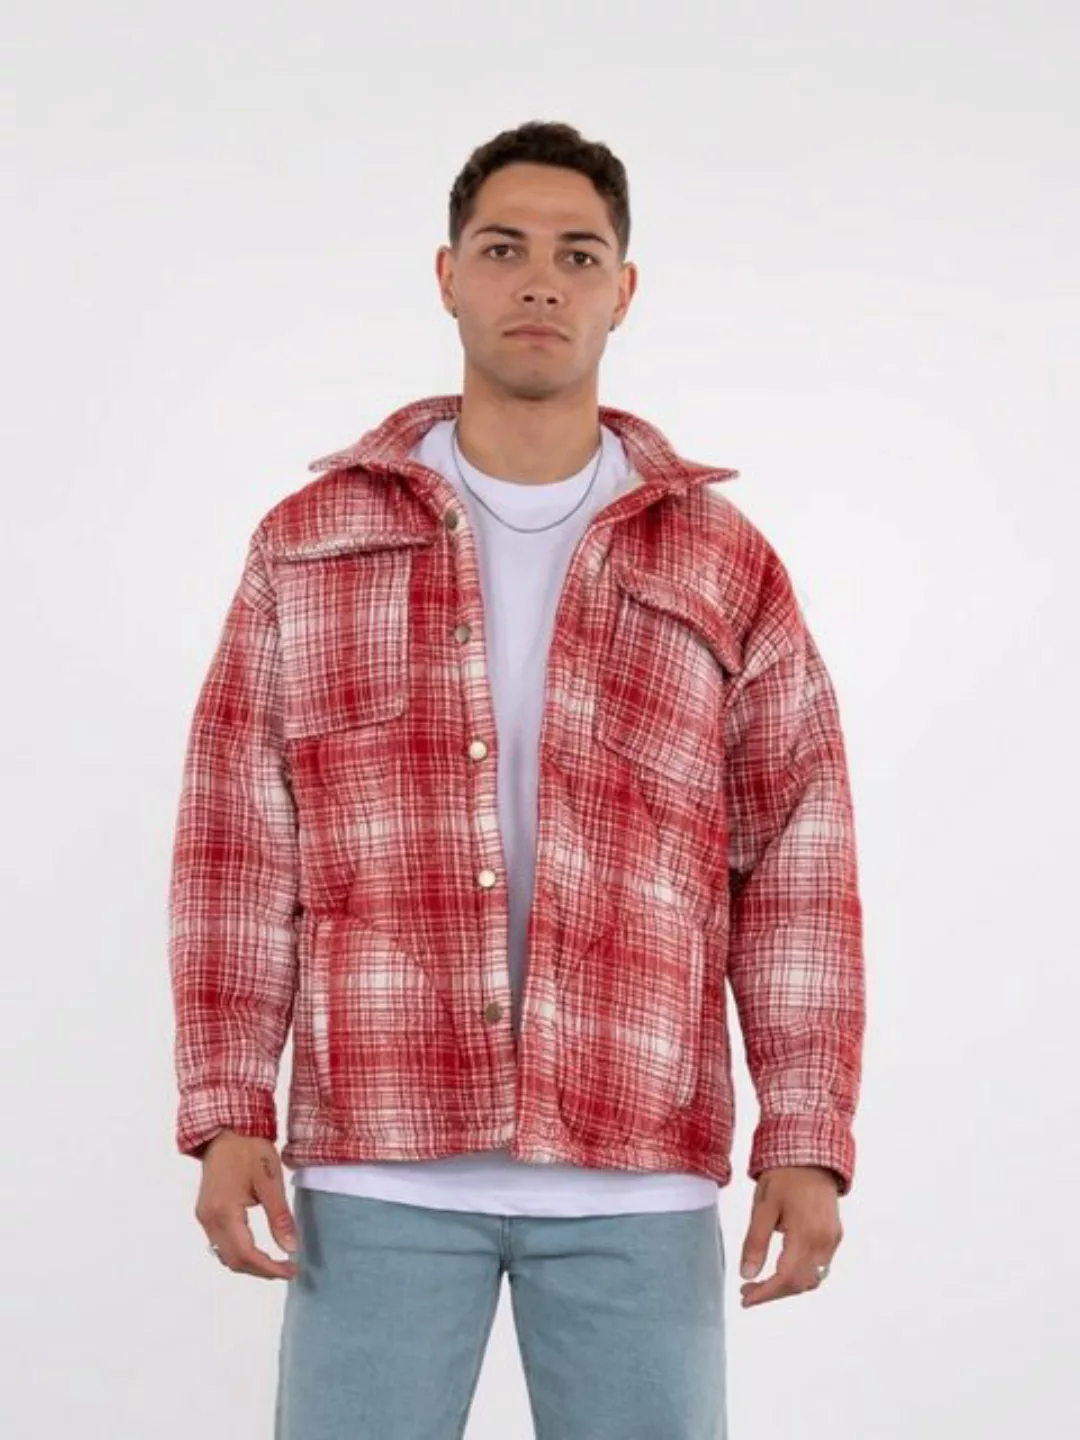 COFI Casuals Hemdjacke Lumberjacket Jacket Kapitone Herren Flanelljacke kar günstig online kaufen